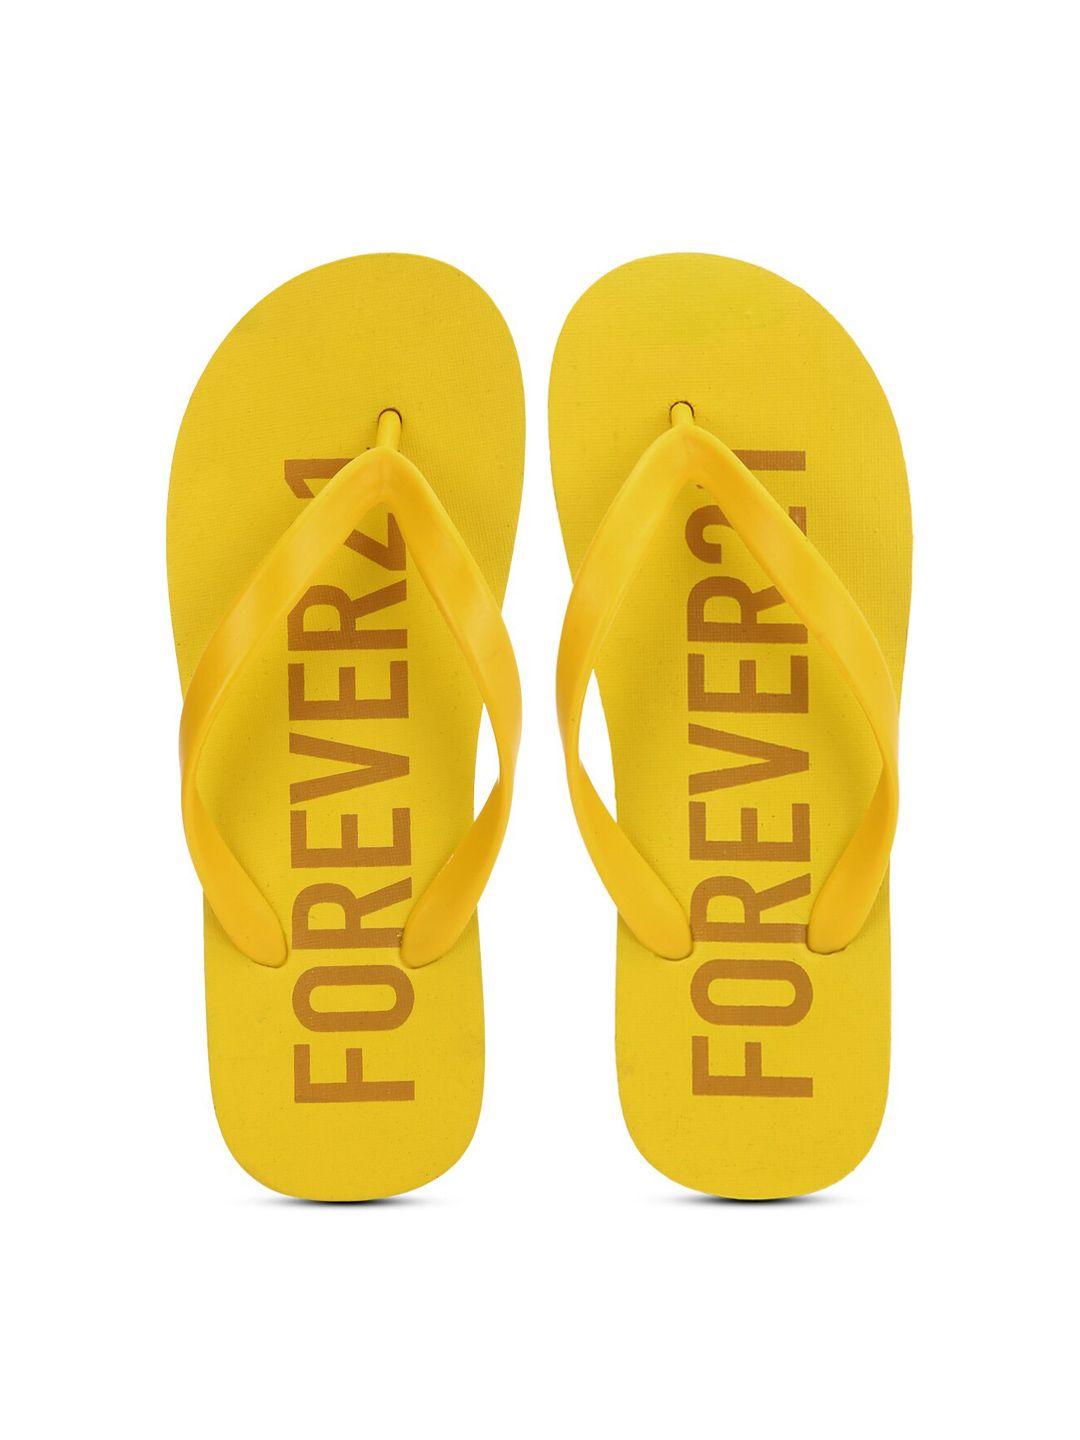 forever-21-men-yellow-&-brown-printed-rubber-thong-flip-flops